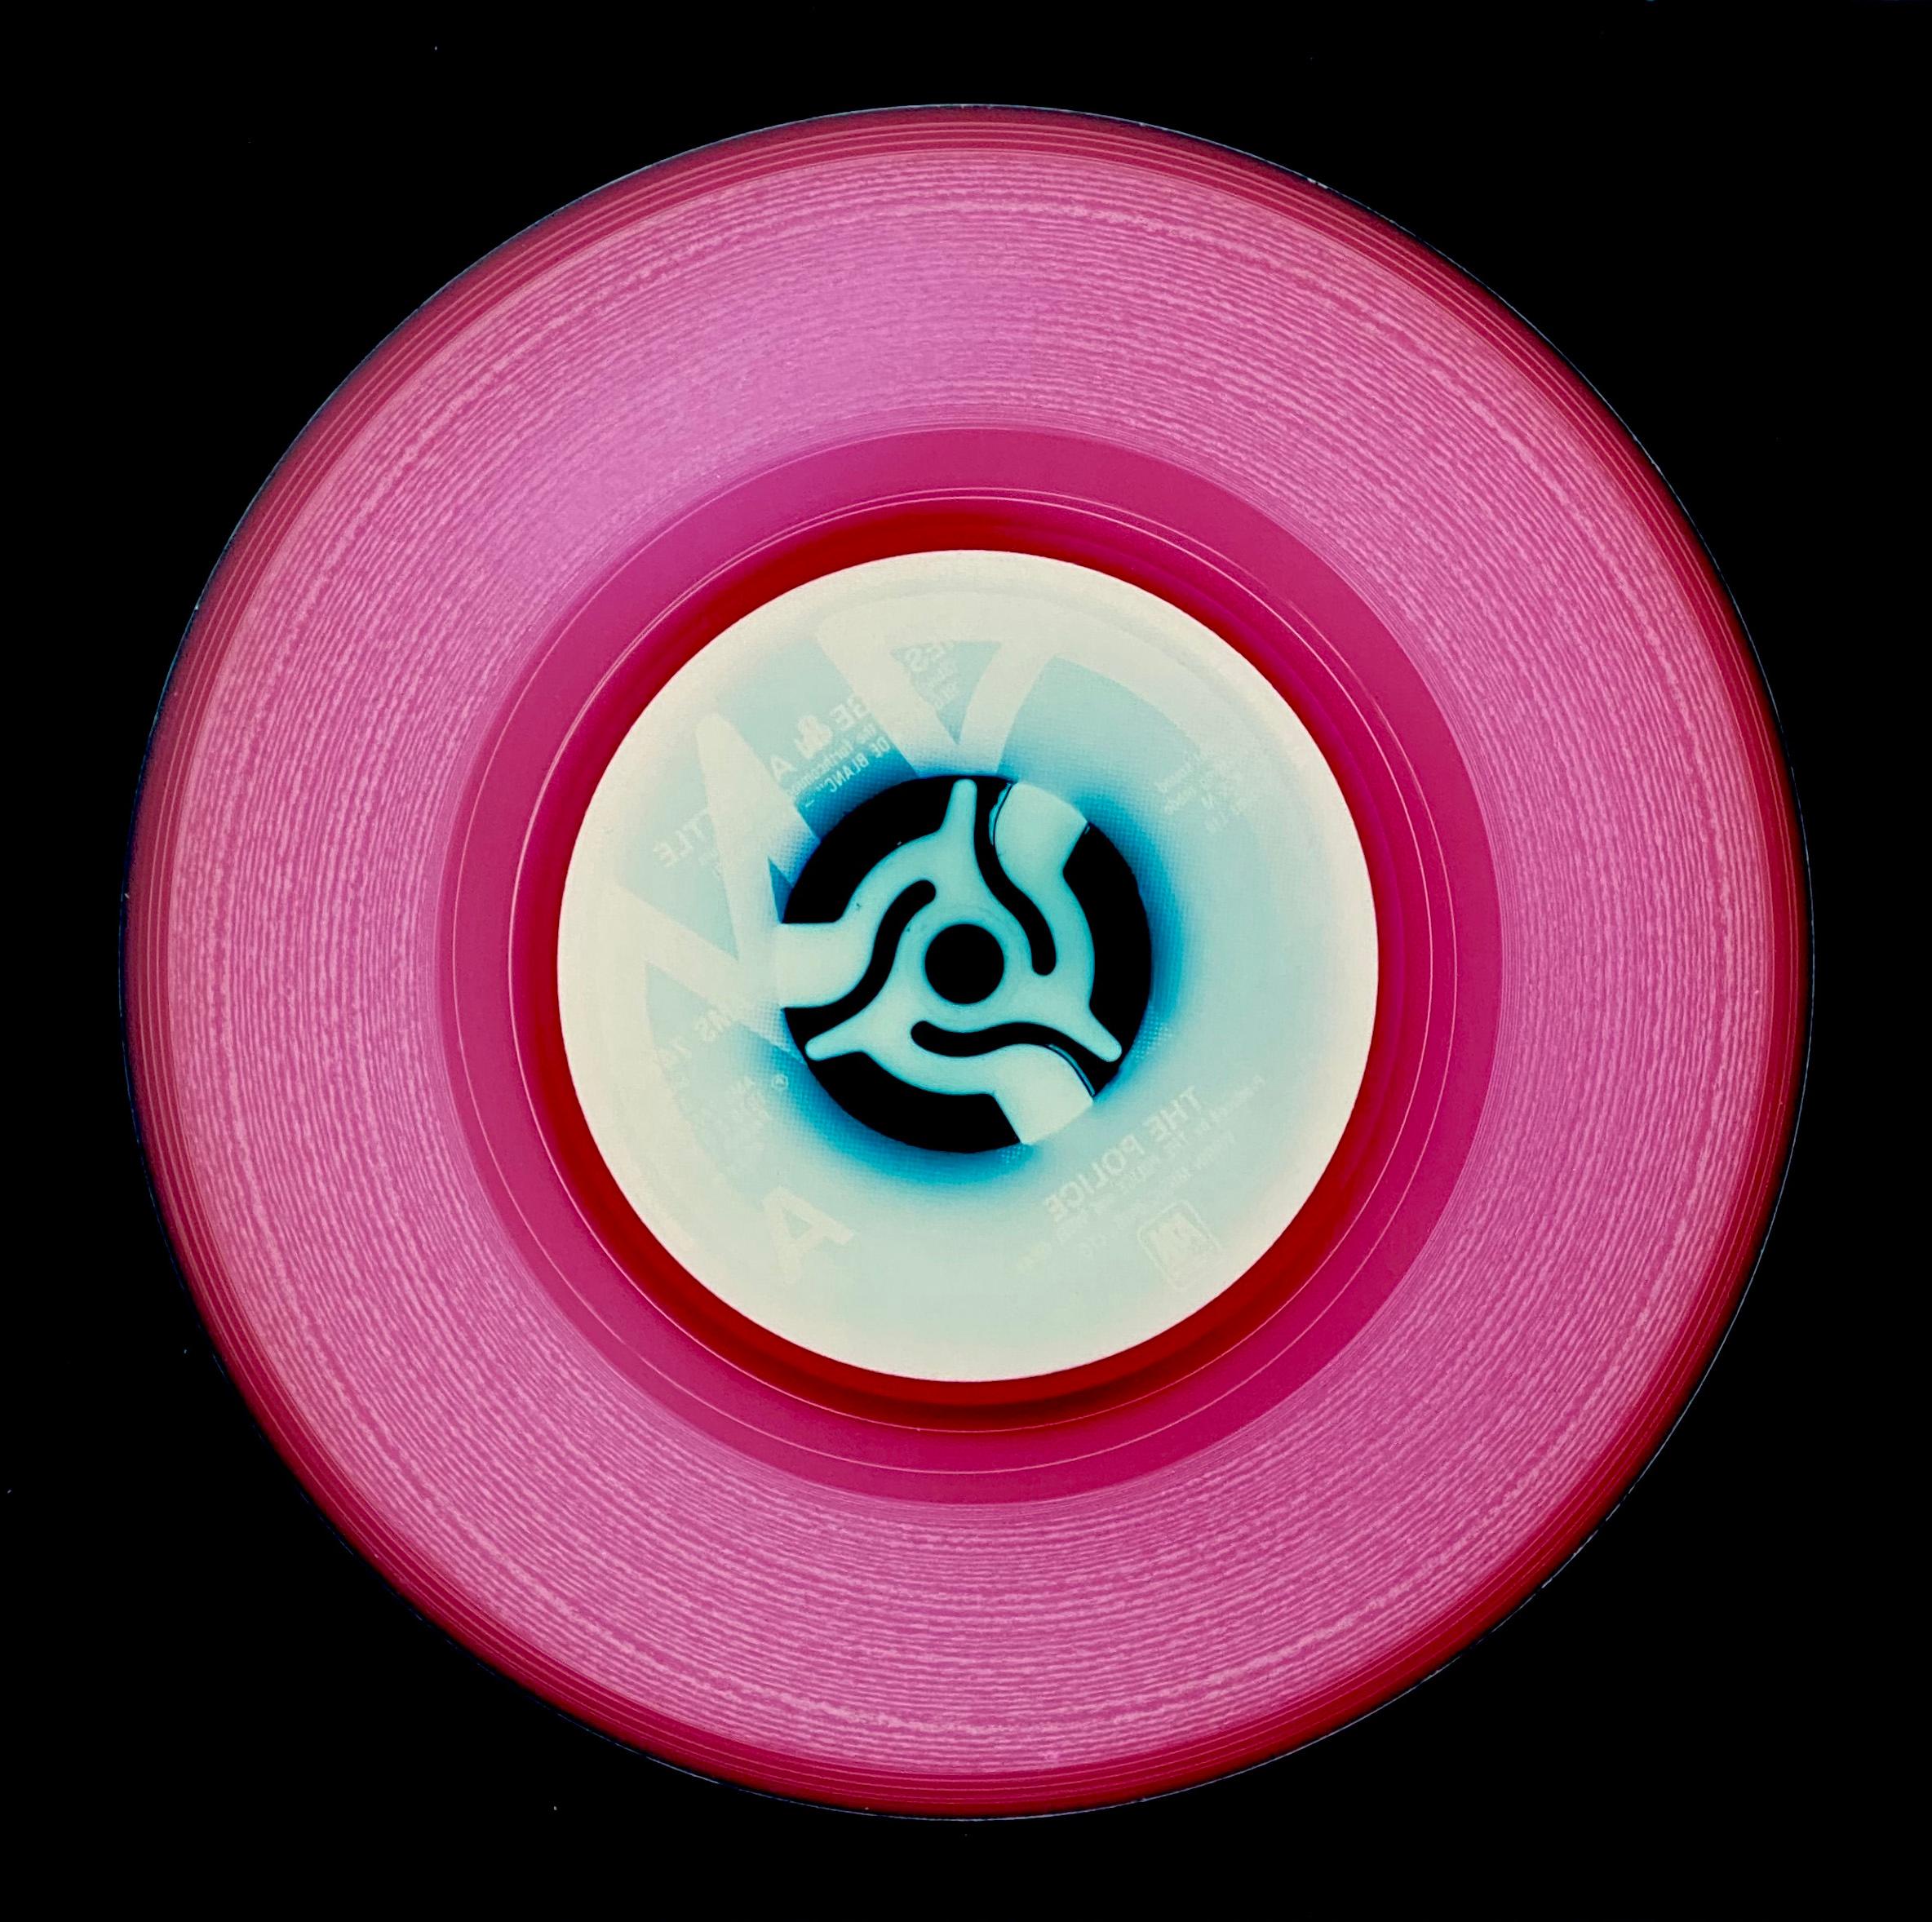 Vinyl Collection, A (Pink) - Conceptual, Pop Art, Color Photography